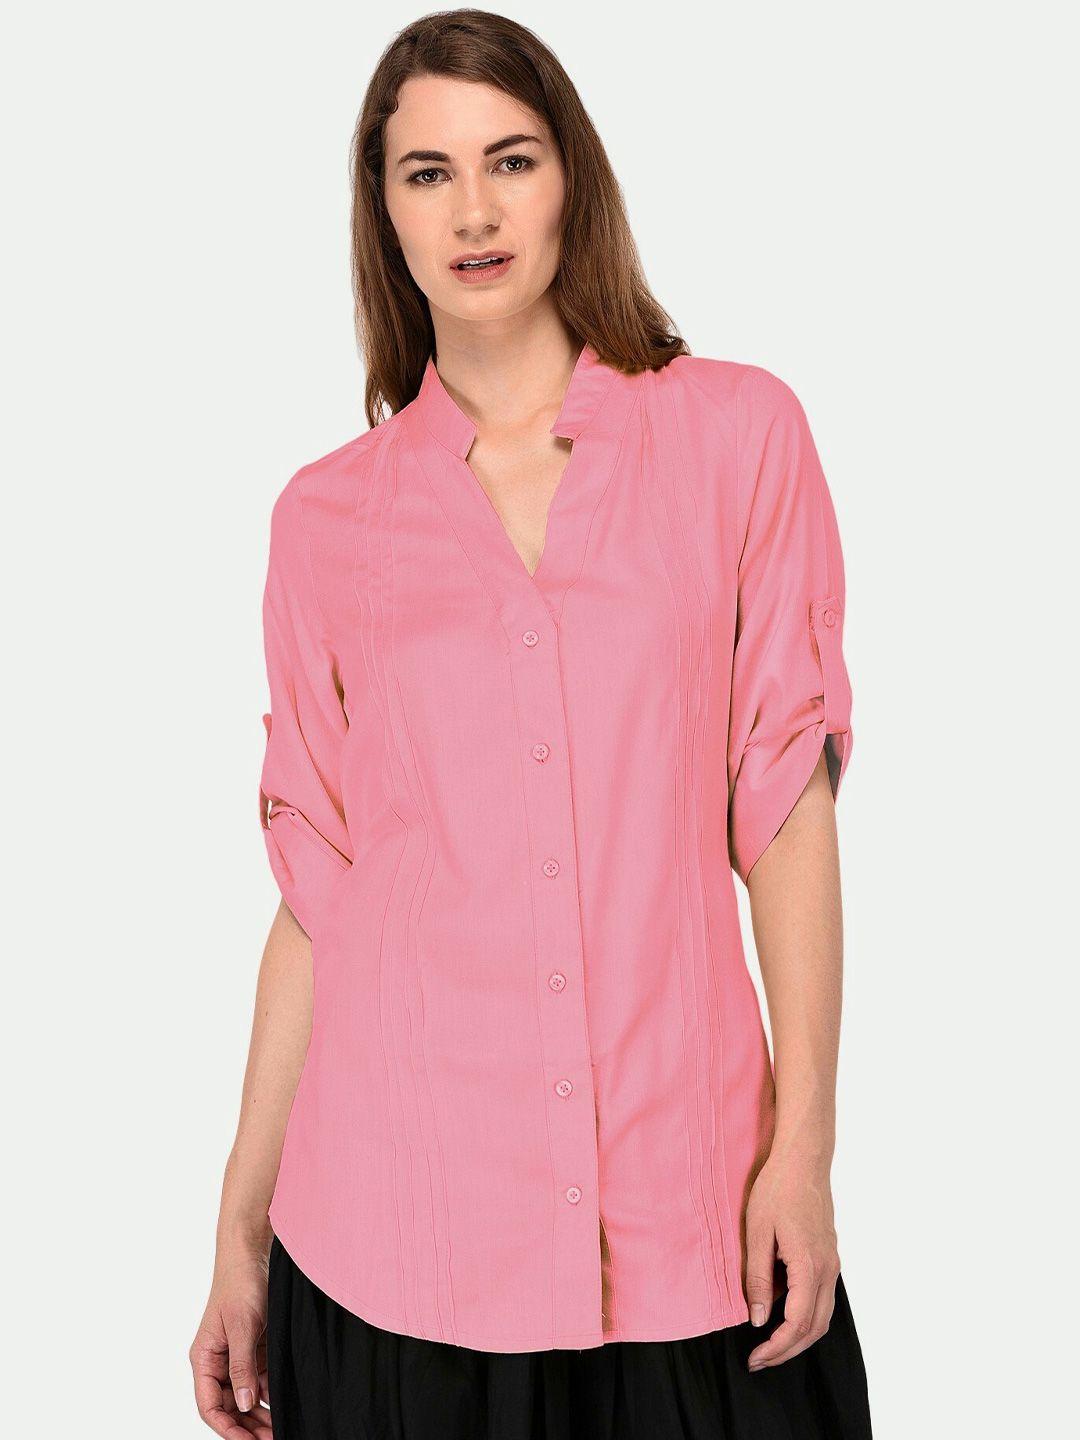 patrorna women pink comfort casual shirt